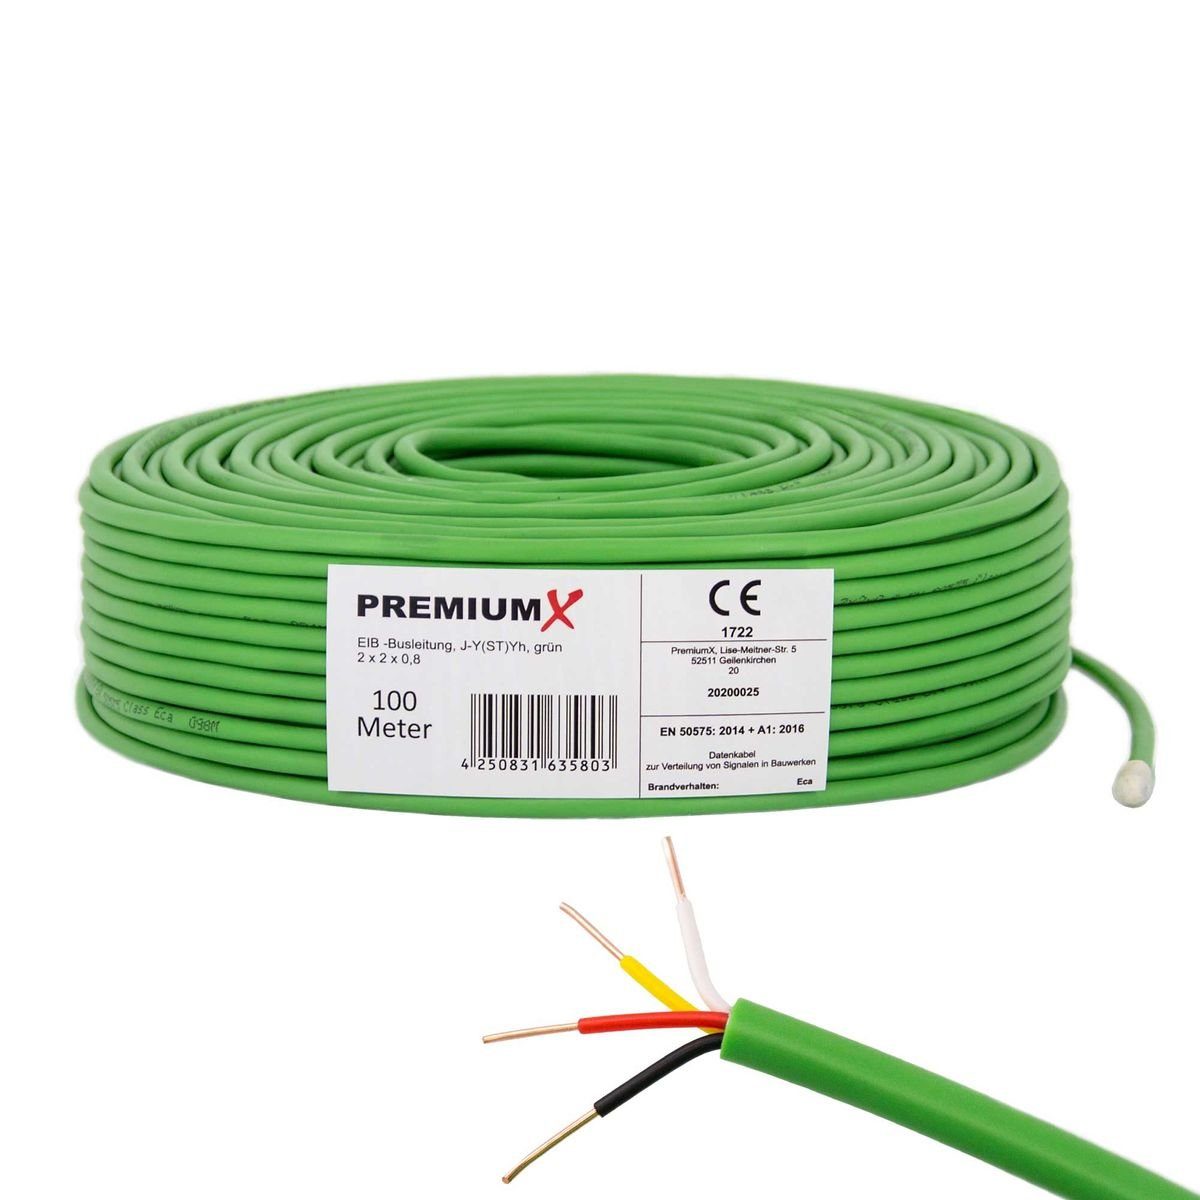 PremiumX 100m EIB BUS-Kabel J-Y(ST)Yh 2x2x0,8 Eca Busleitung Datenkabel grün Installationskabel